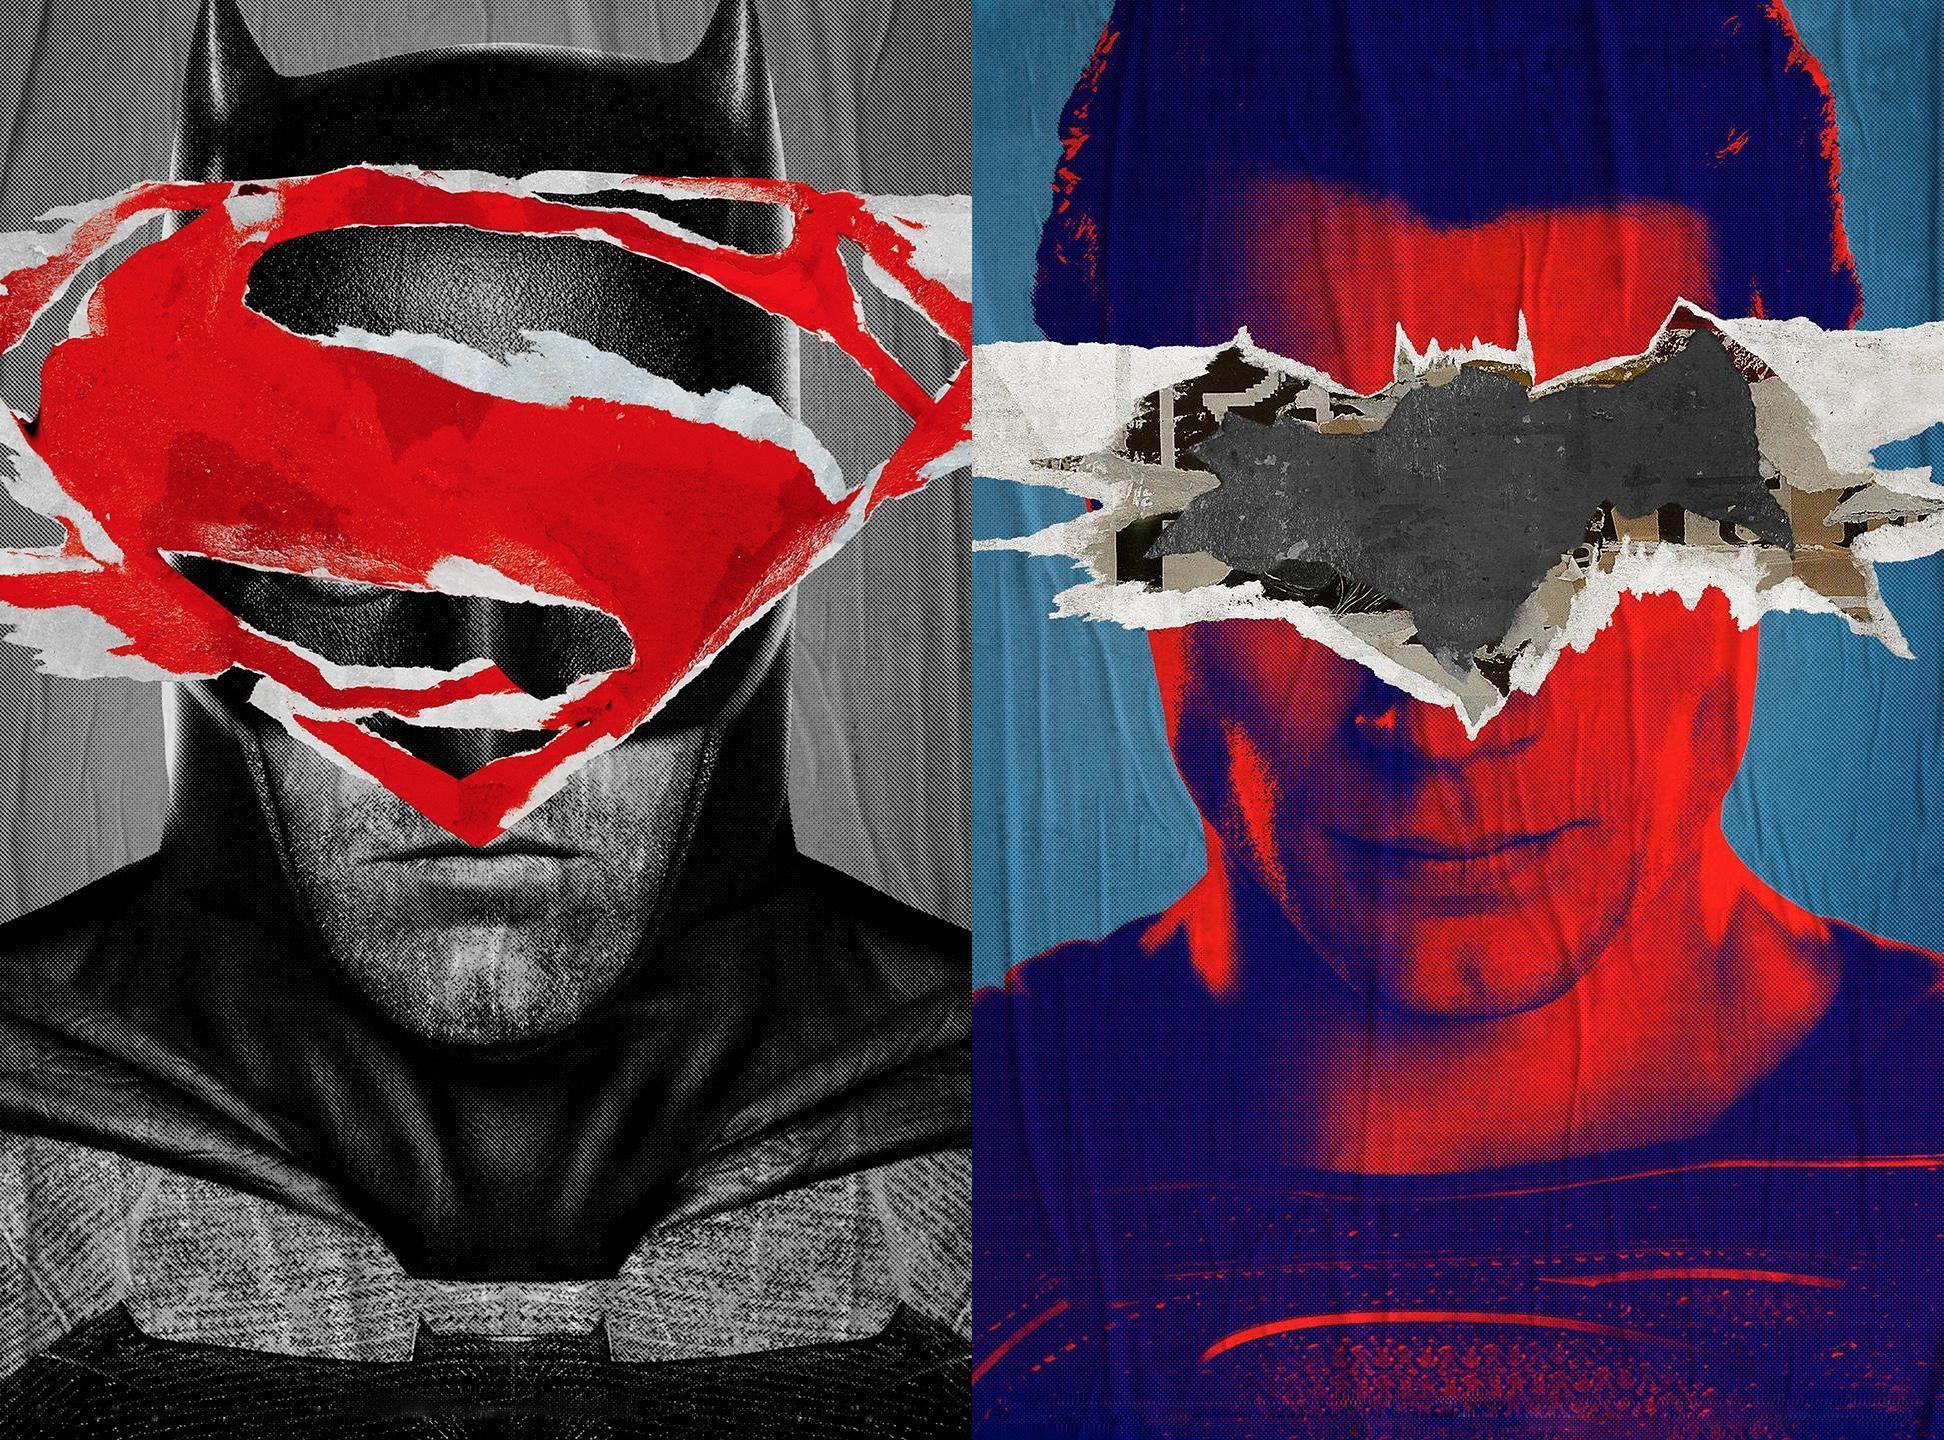 Batman v Superman wallpaper for your PC, mobile phone, iPad